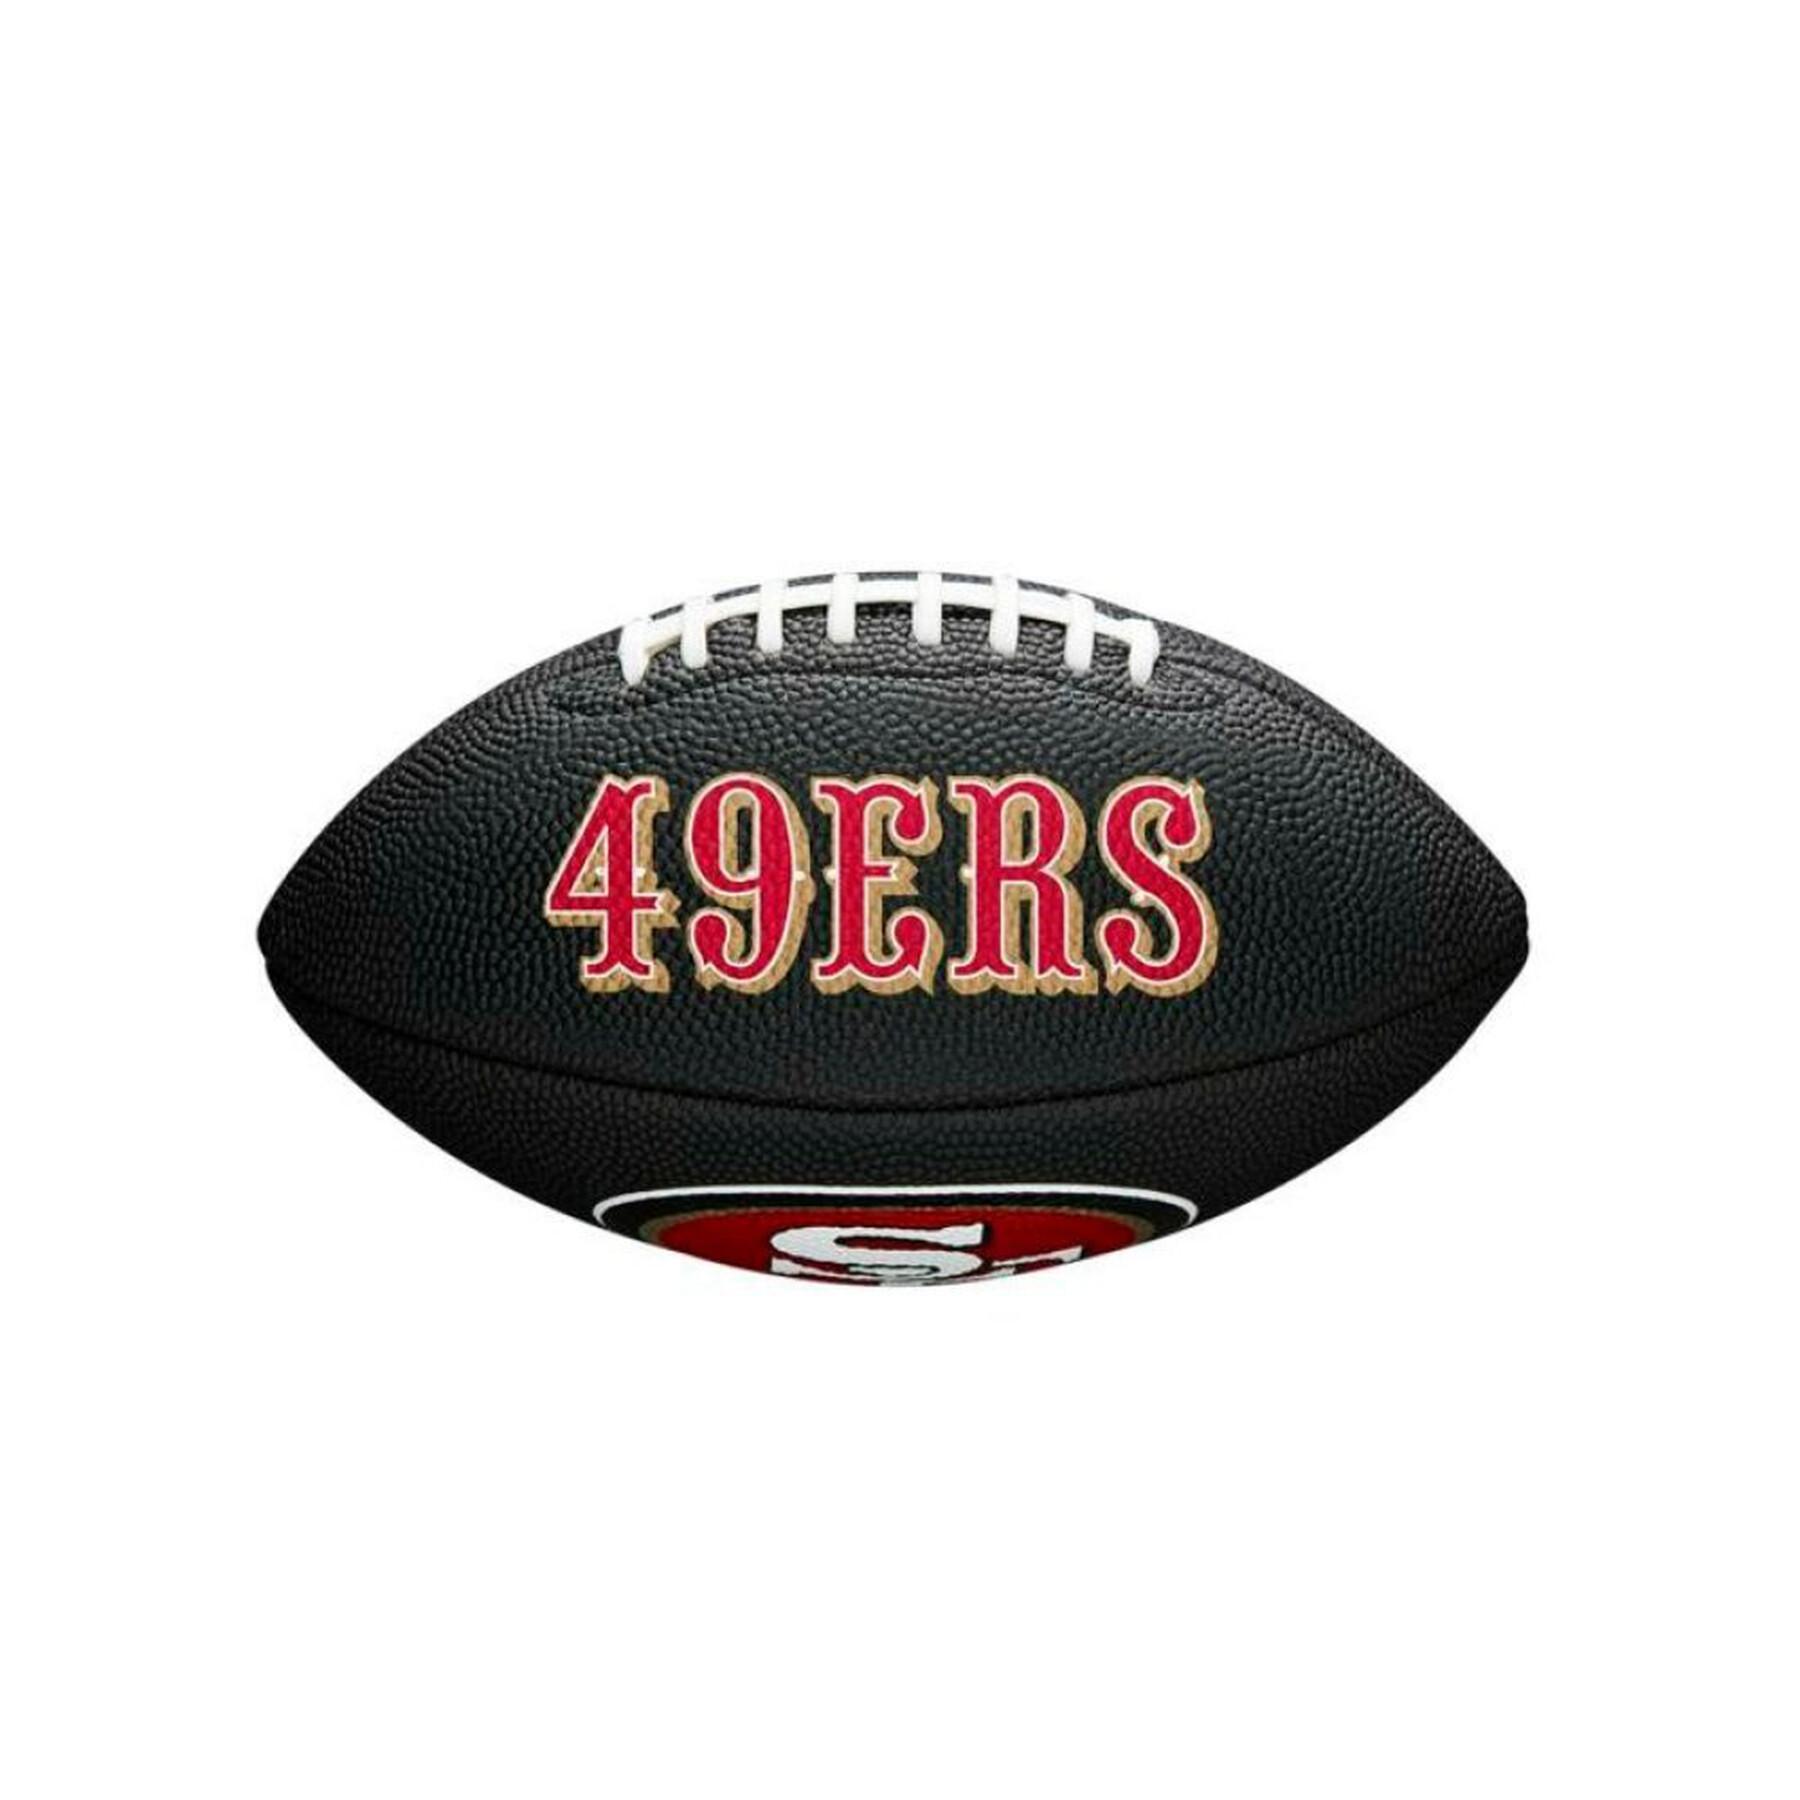 Mini ballon enfant Wilson 49ers NFL